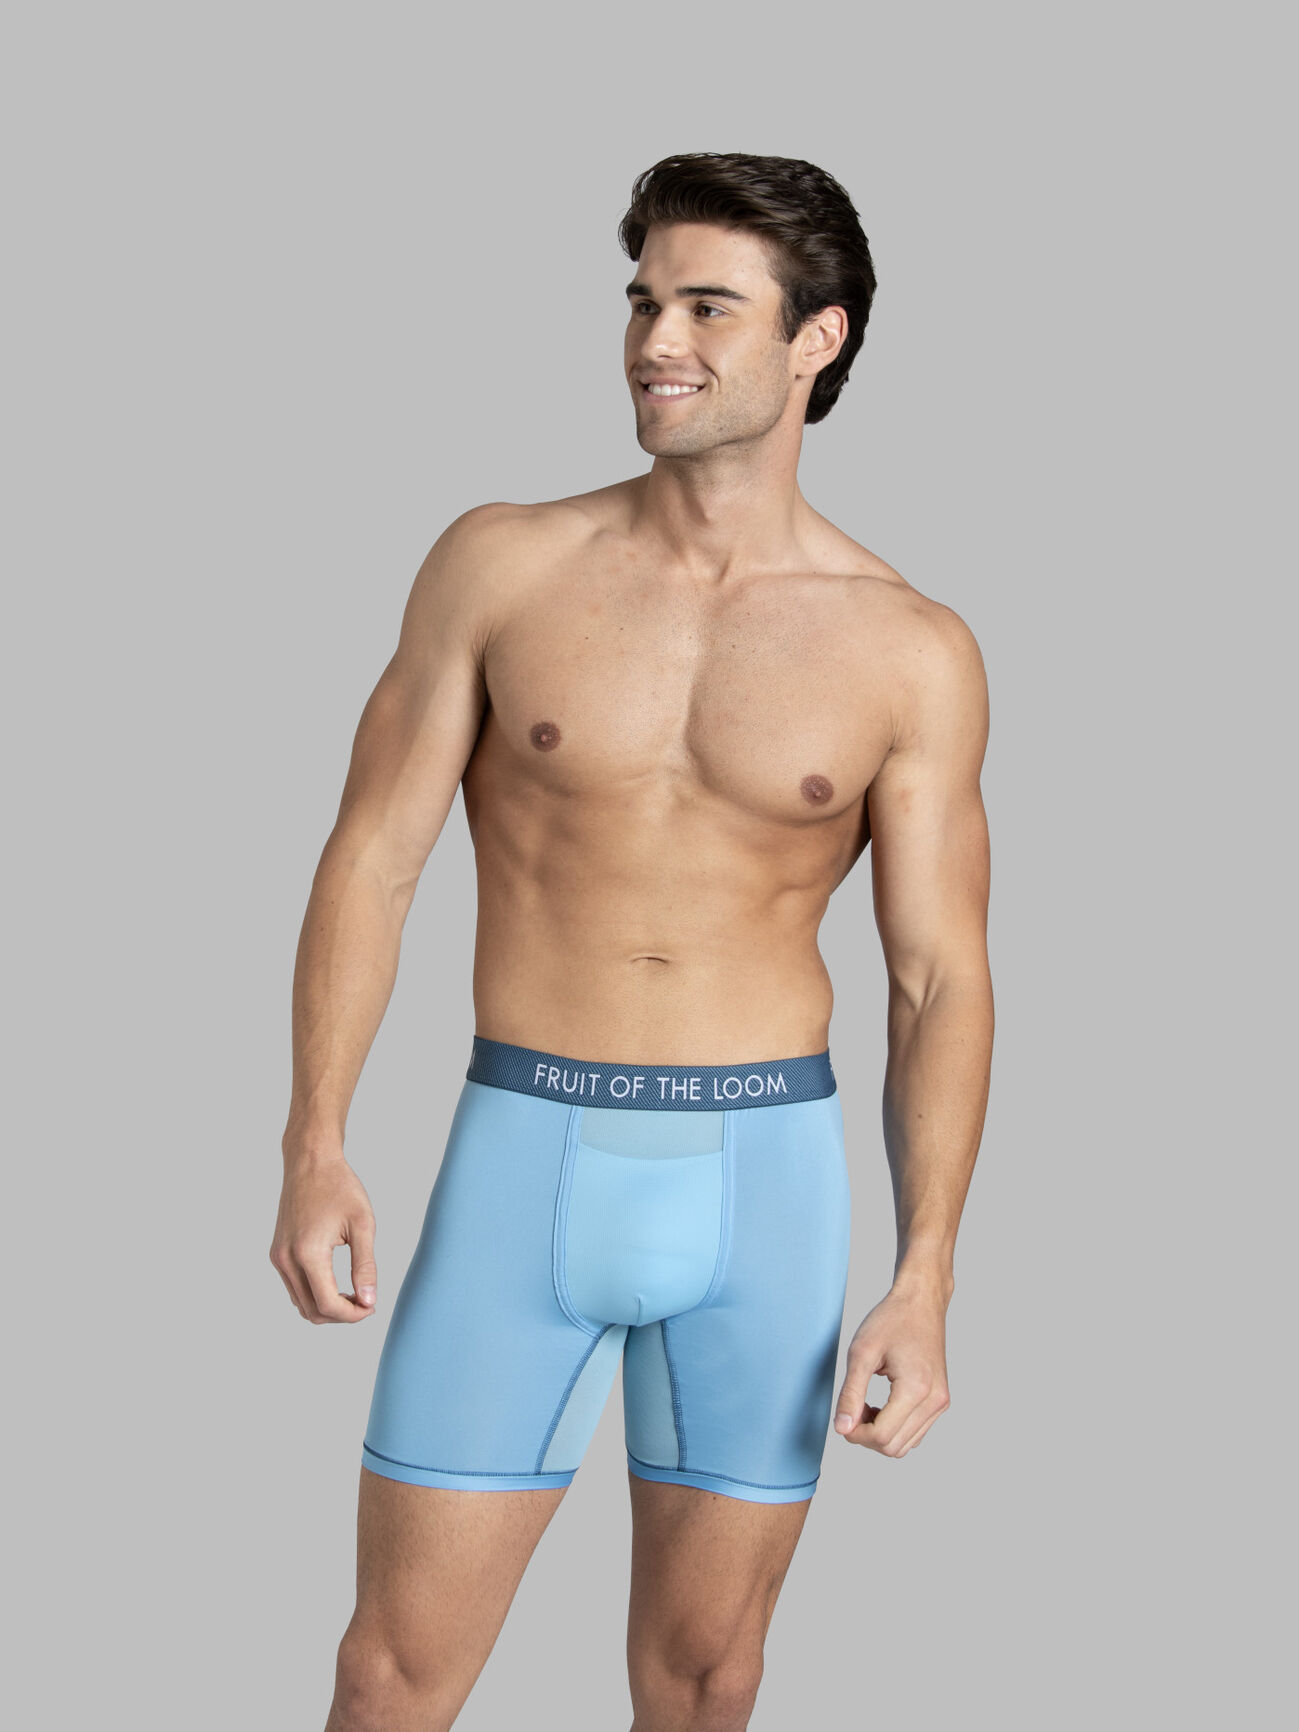 Stylish breathable men's briefs naked butt men in sexy underwear